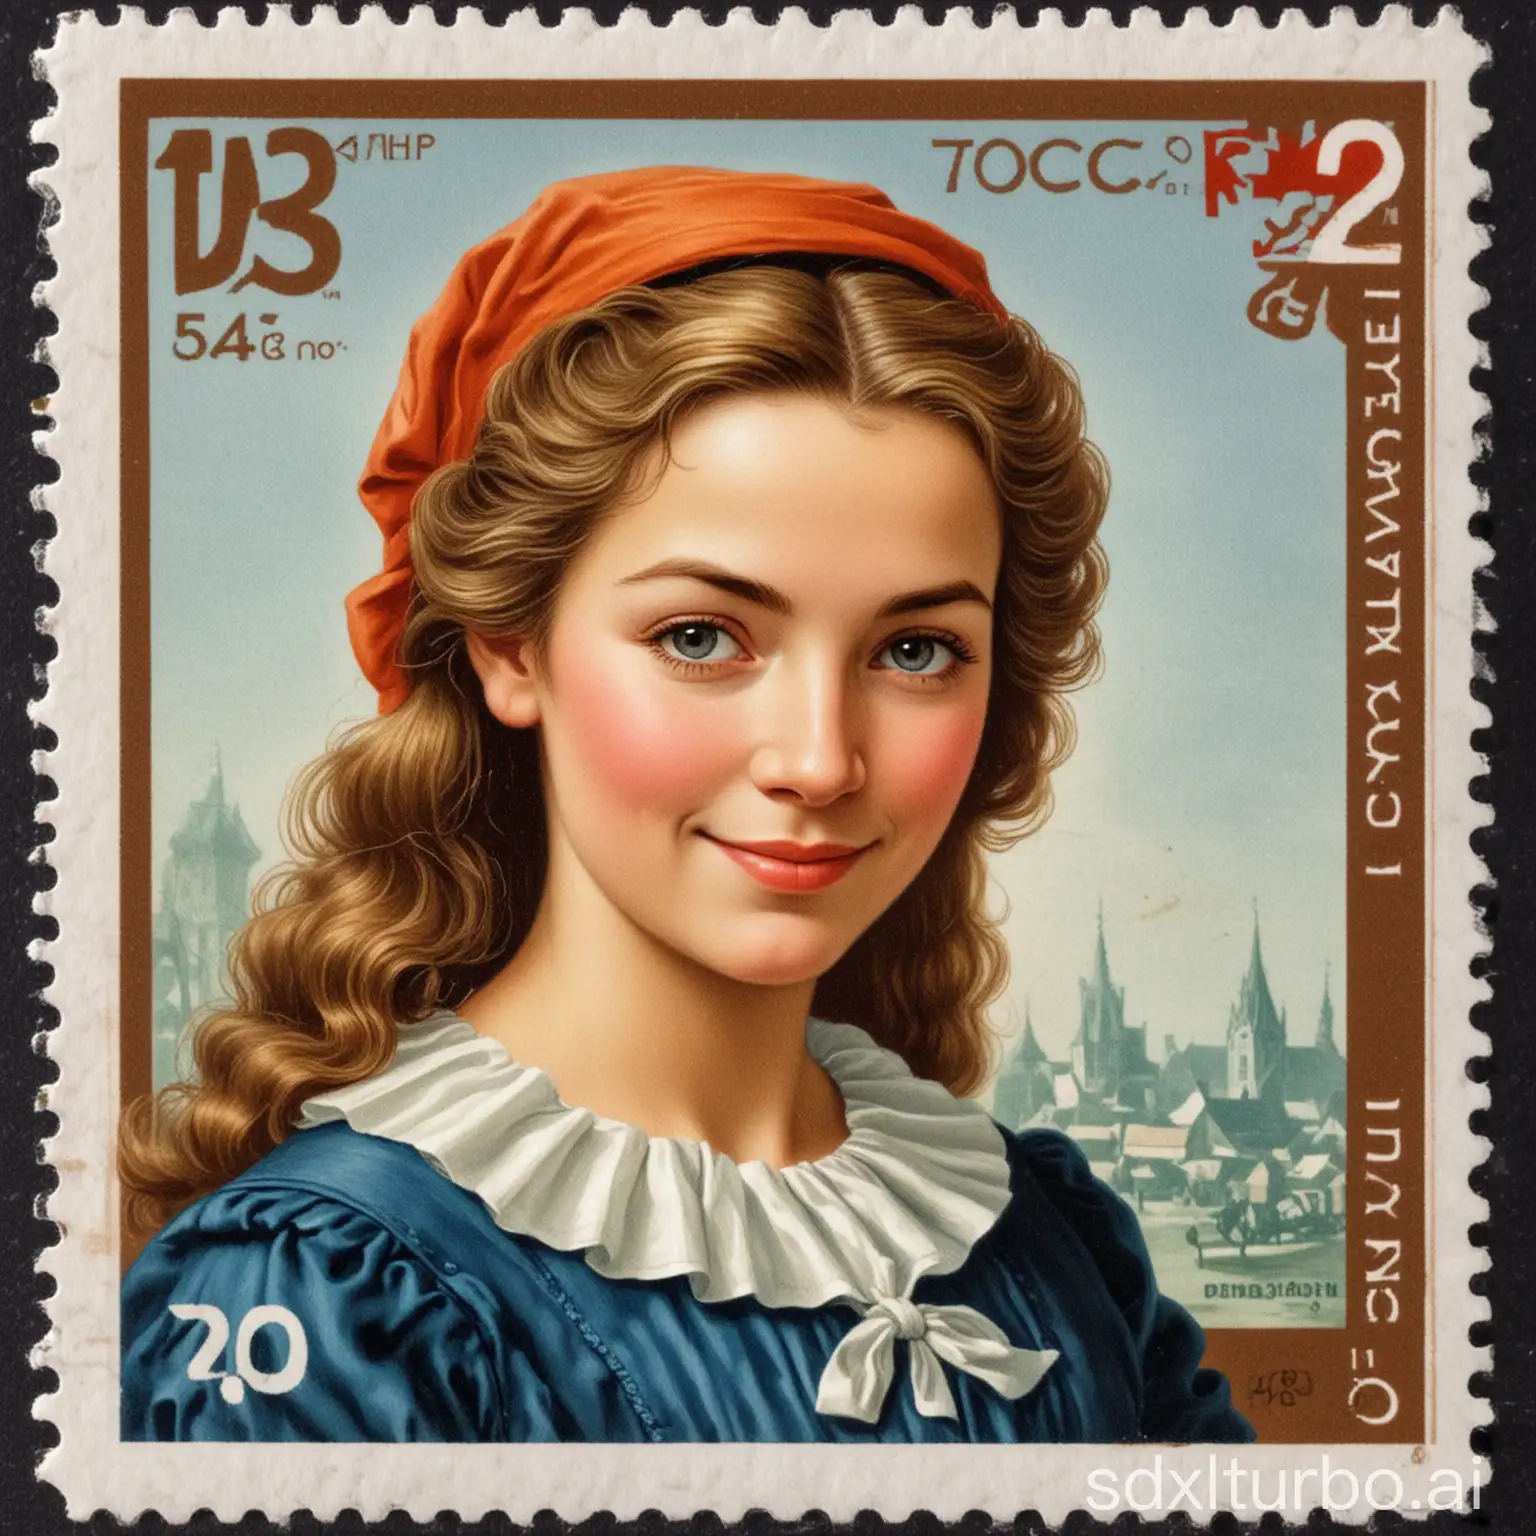 Charming-Dutch-Woman-on-Vintage-Postage-Stamp